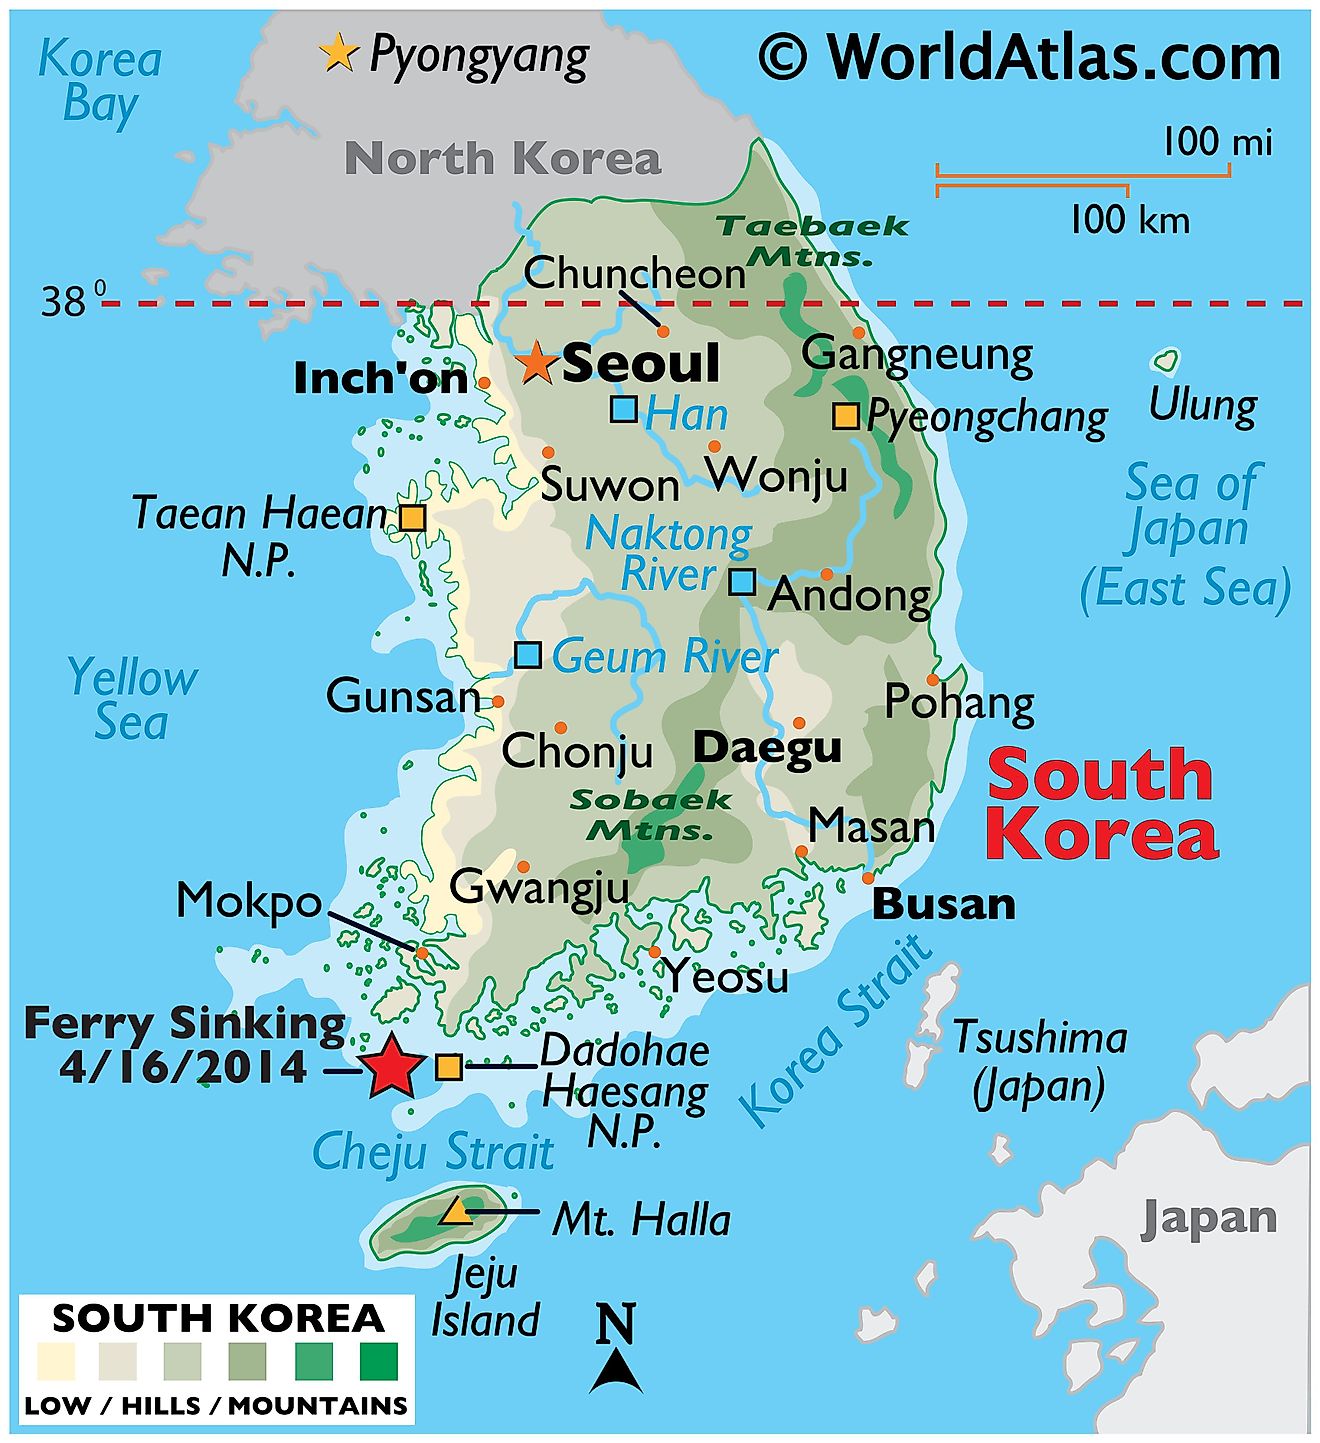 South Korea Map Hd South Korea Maps & Facts - World Atlas